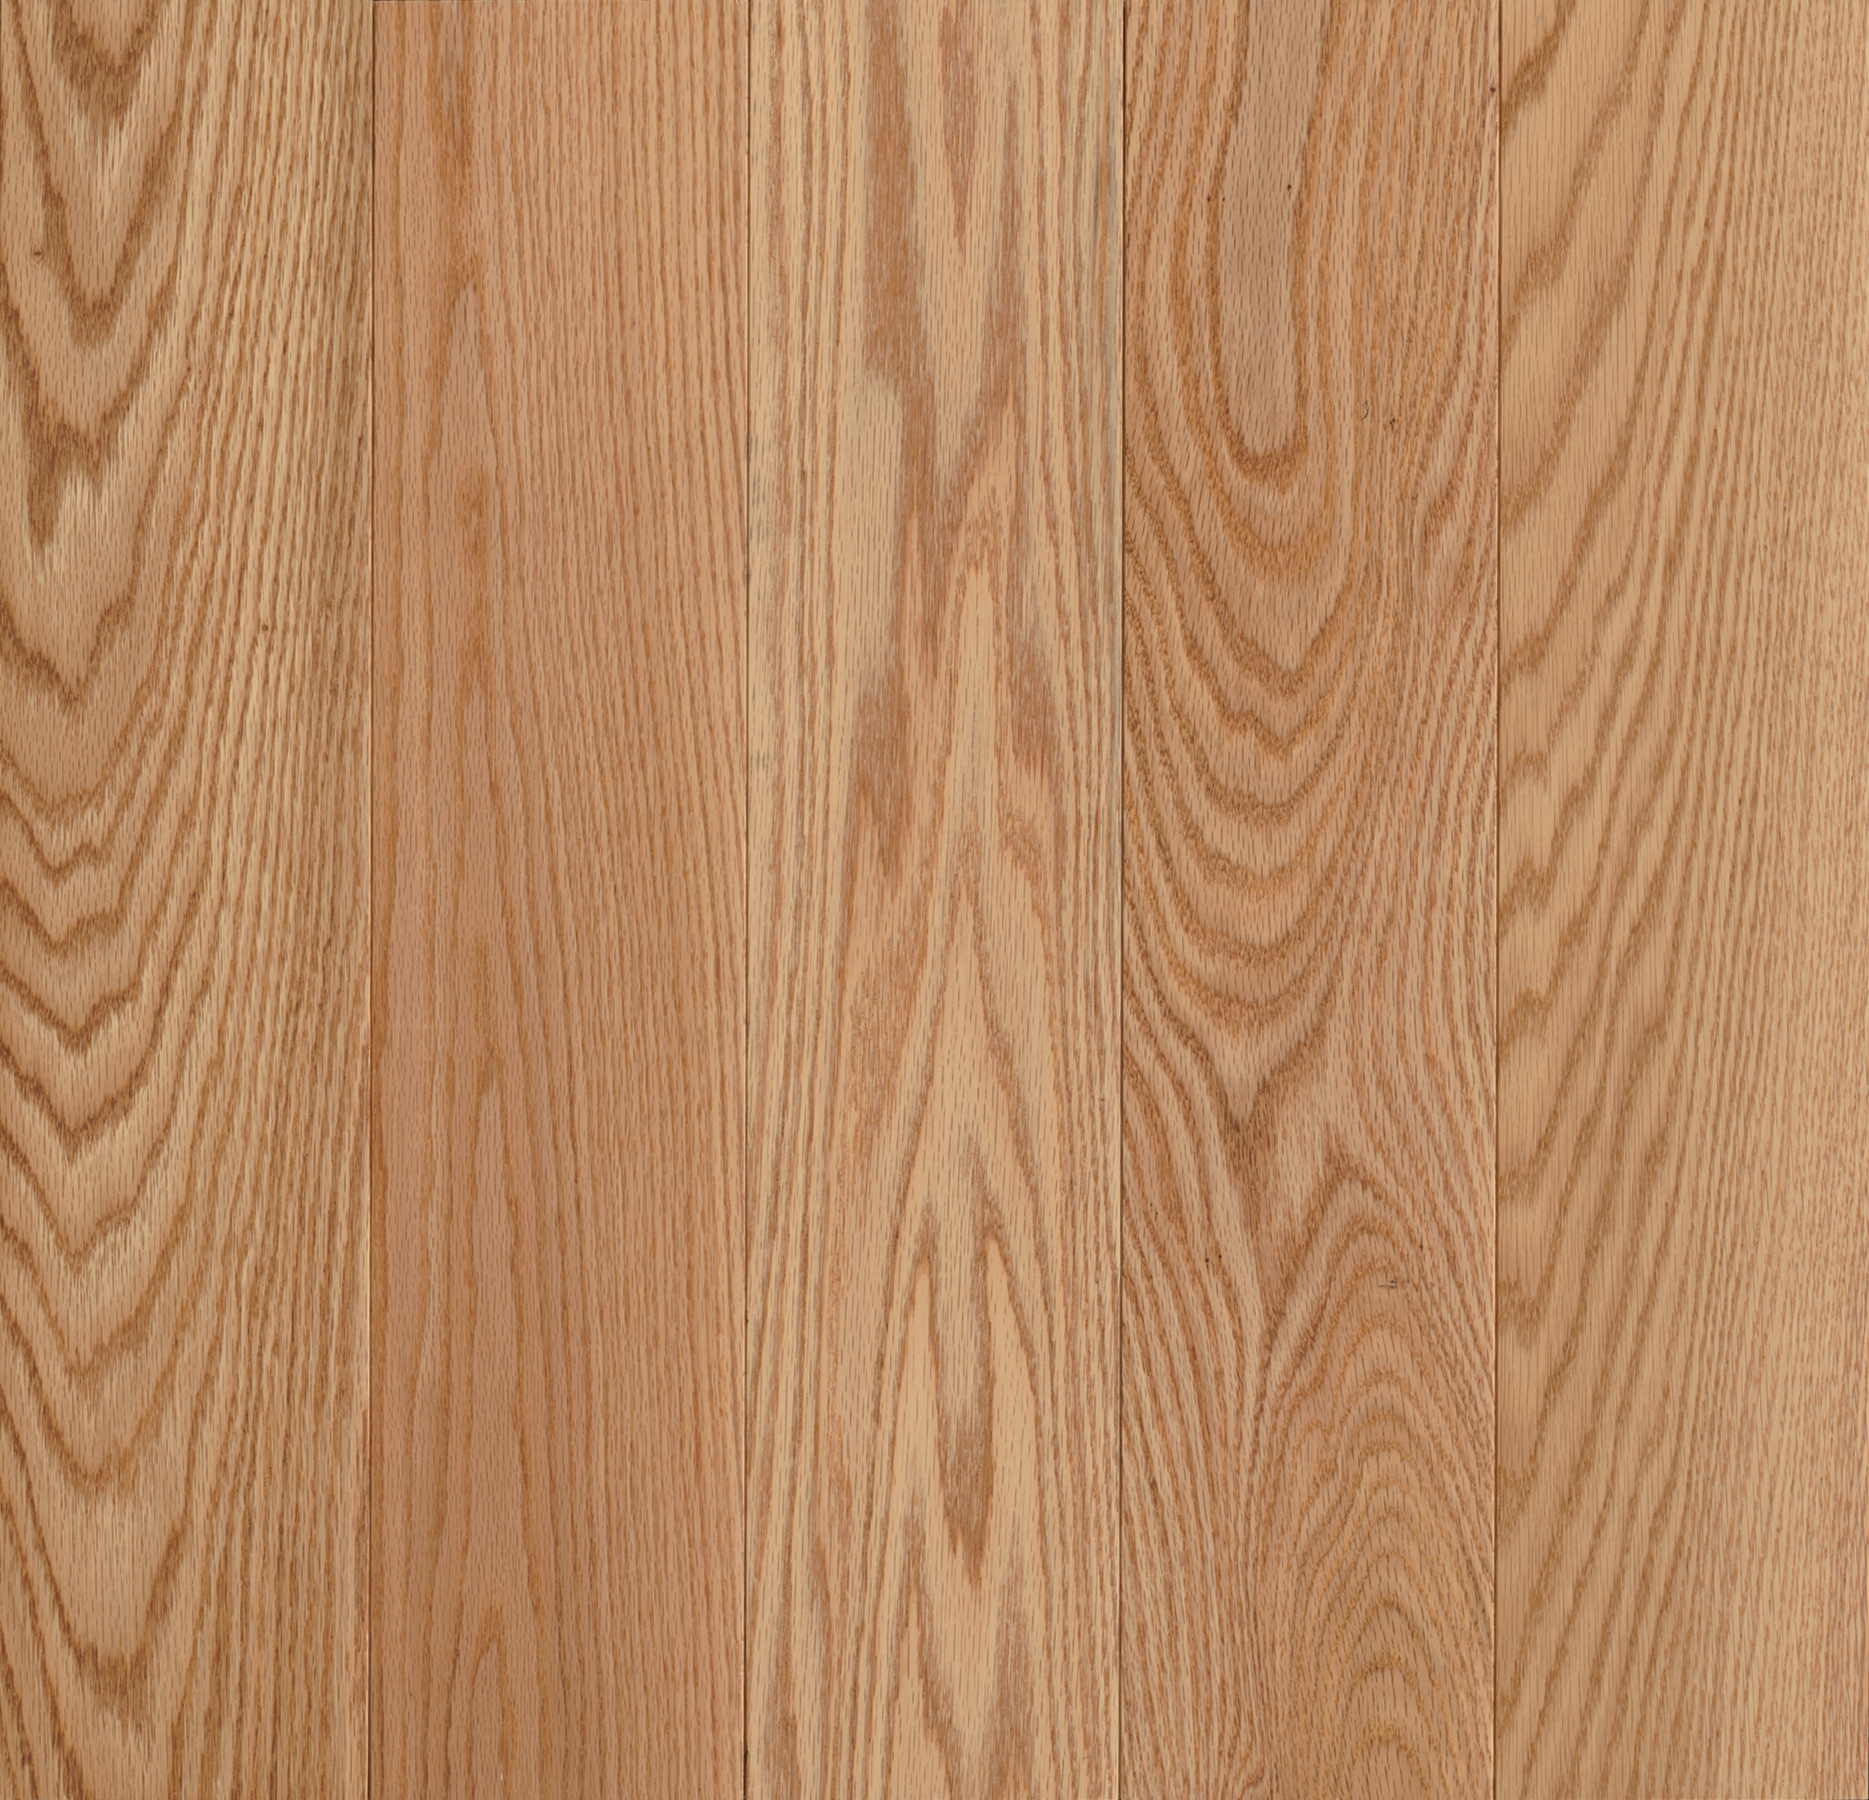 Oak Solid Hardwood Apk5210, Southern Hardwood Floor Supply